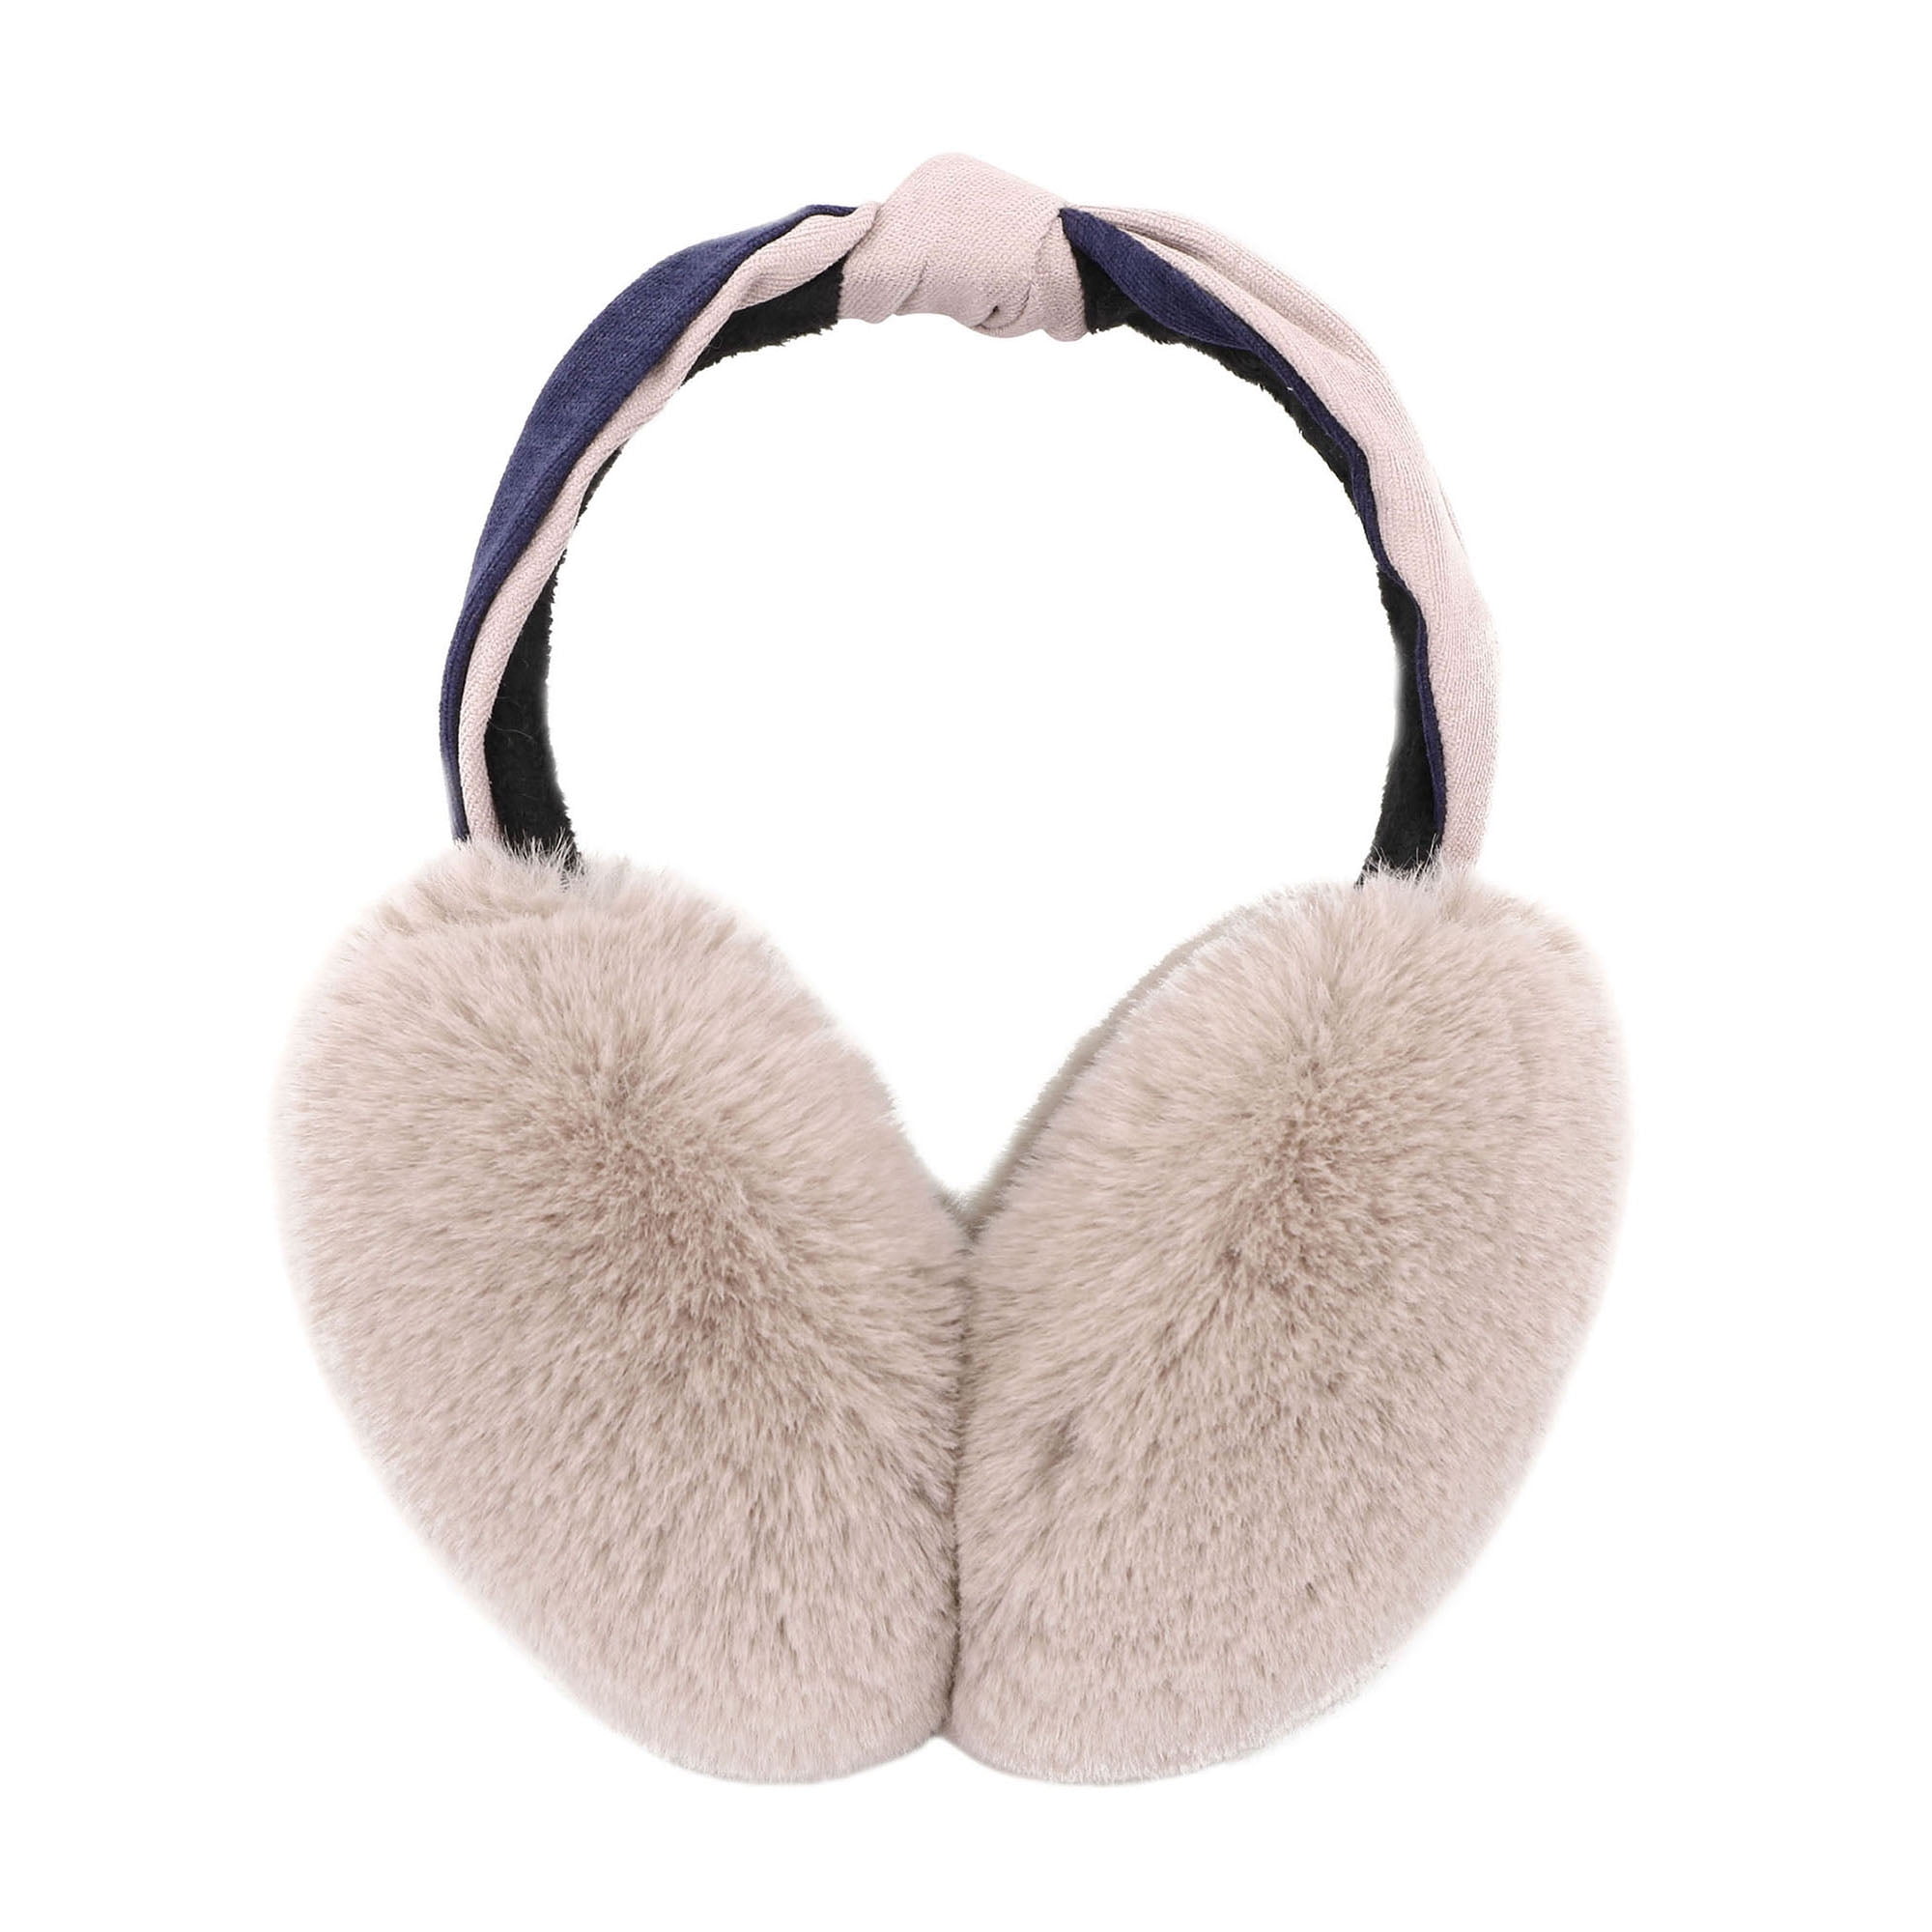 100% sheepskin UK stock Luxury sheepskin adult earmuffs